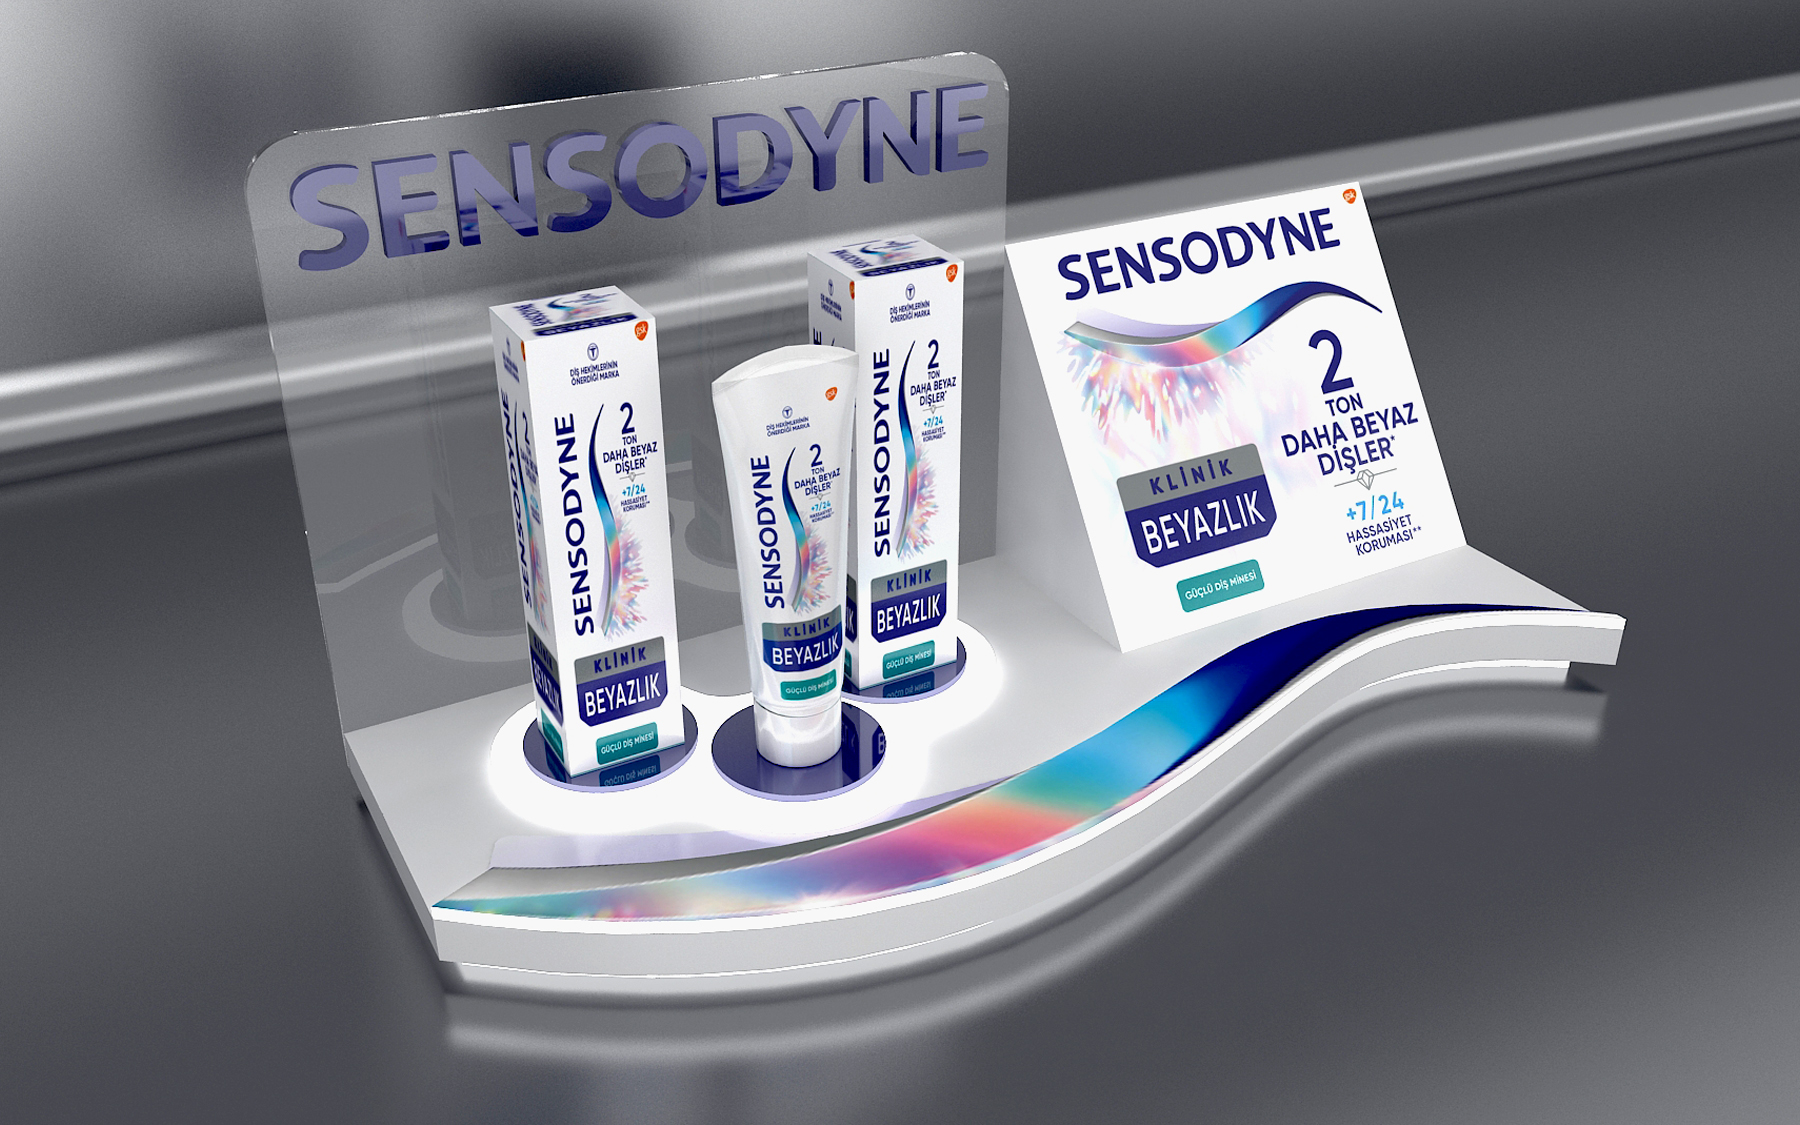 Sensodyne Clinical Whiteness Countertop